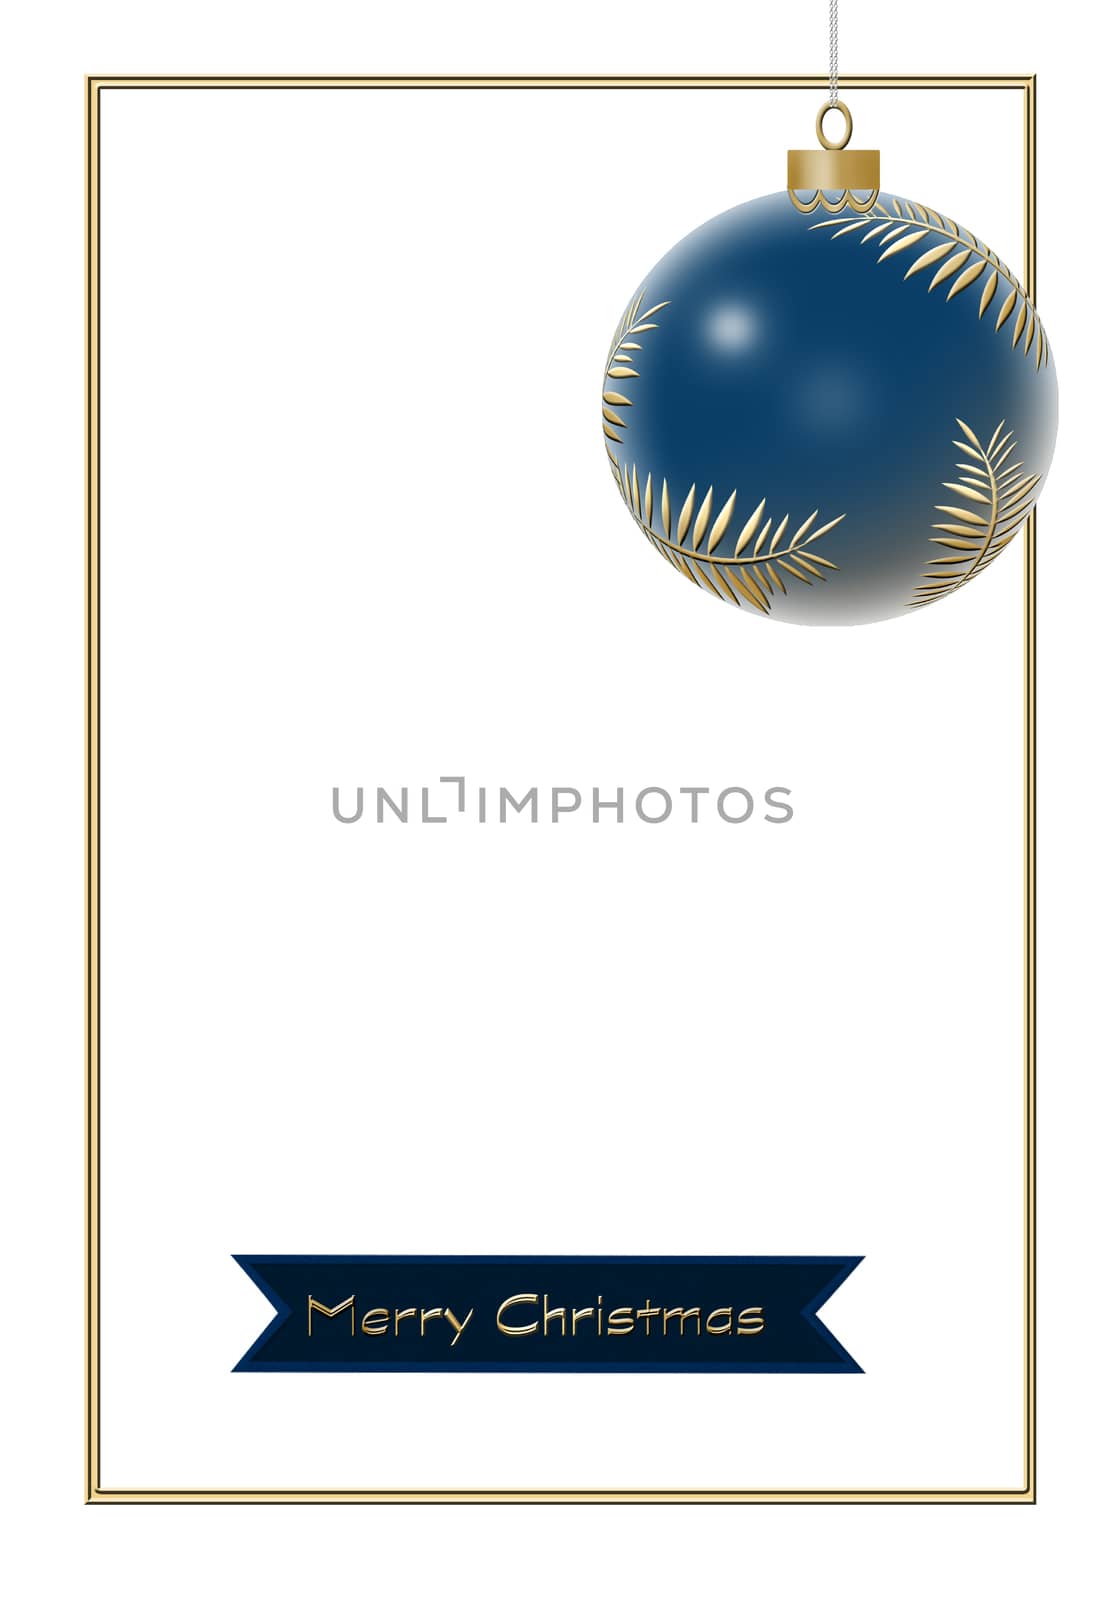 Minimalist Christmas card with ball by NelliPolk